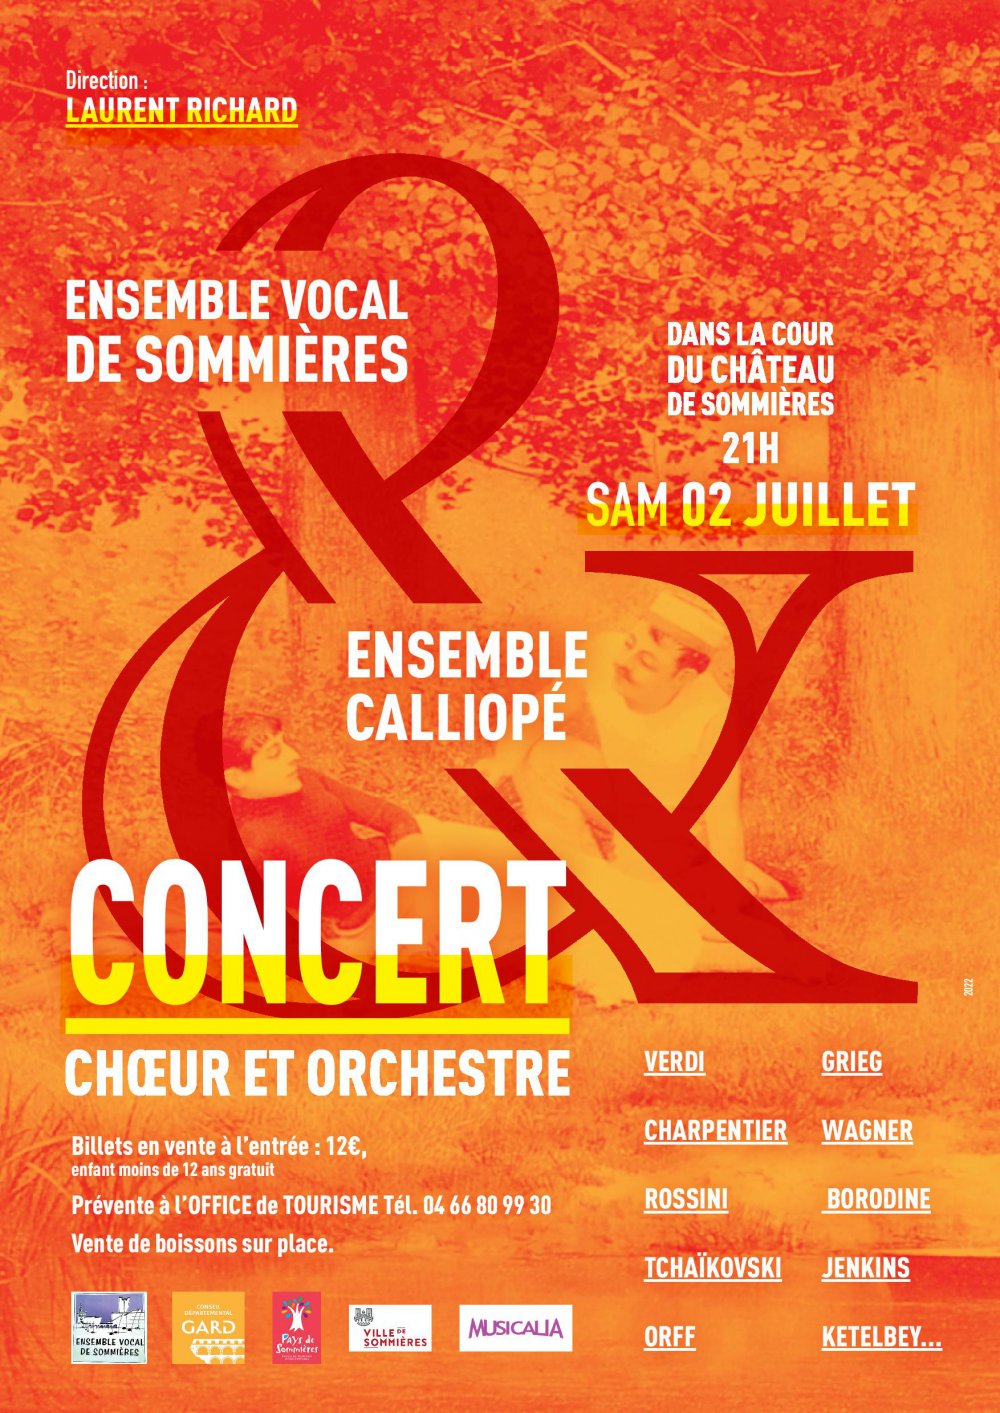 Ensemble Vocal de Sommires & Ensemble Calliop